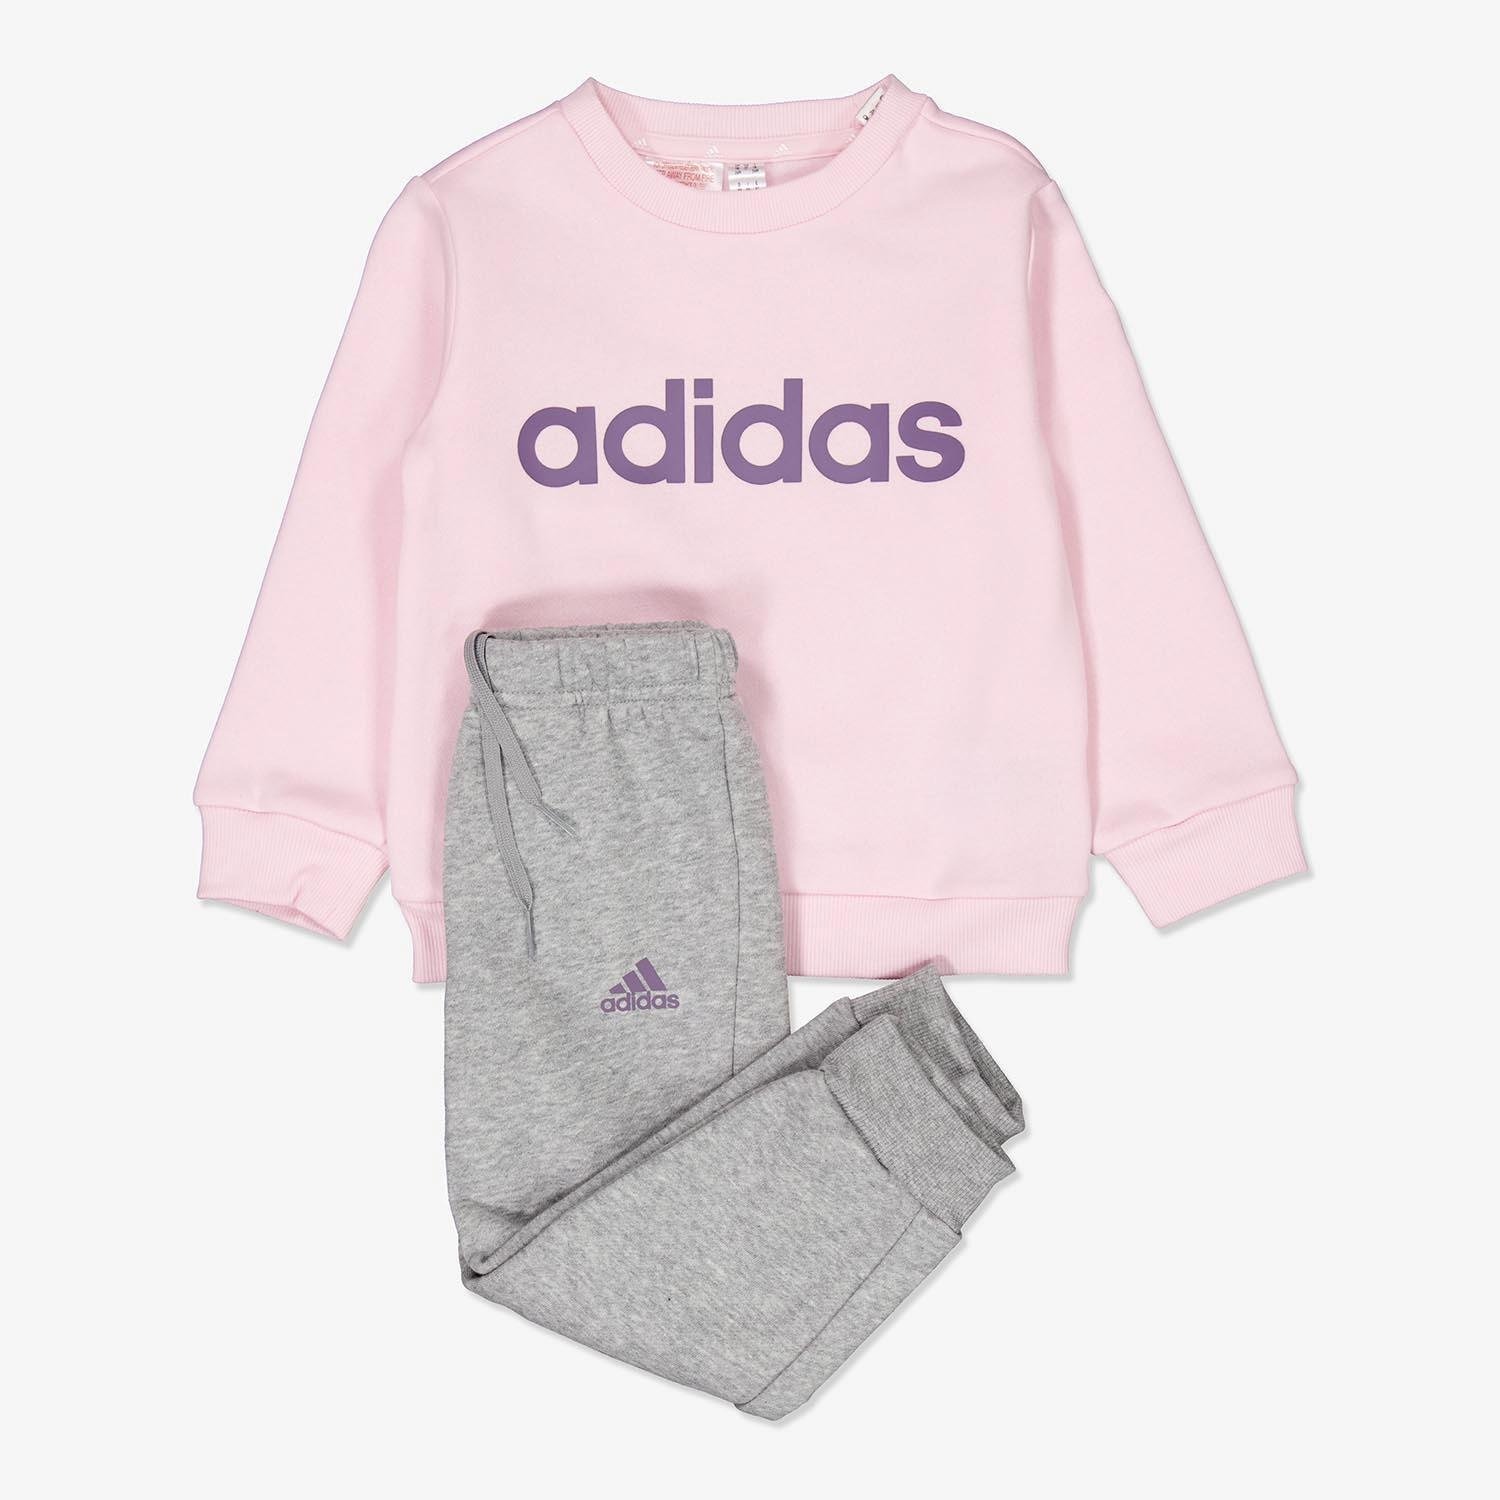 adidas Adidas joggingpak roze/grijs baby kinderen